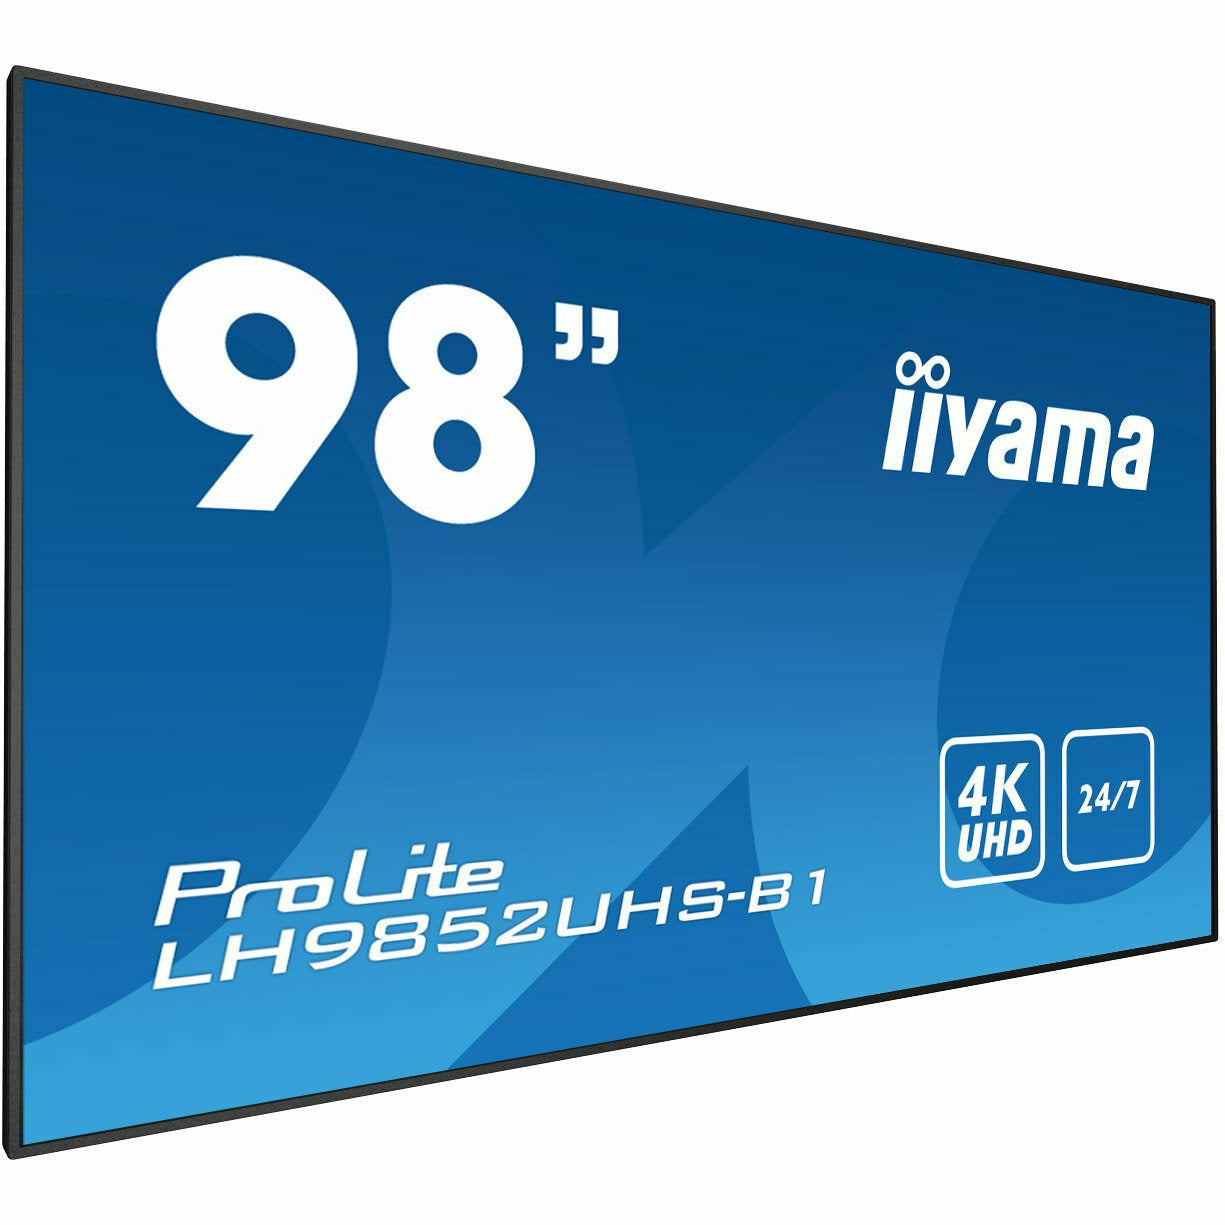 Dark Cyan iiyama ProLite LH9852UHS-B1 98" 4K Professional Digital Signage 24/7 LFD